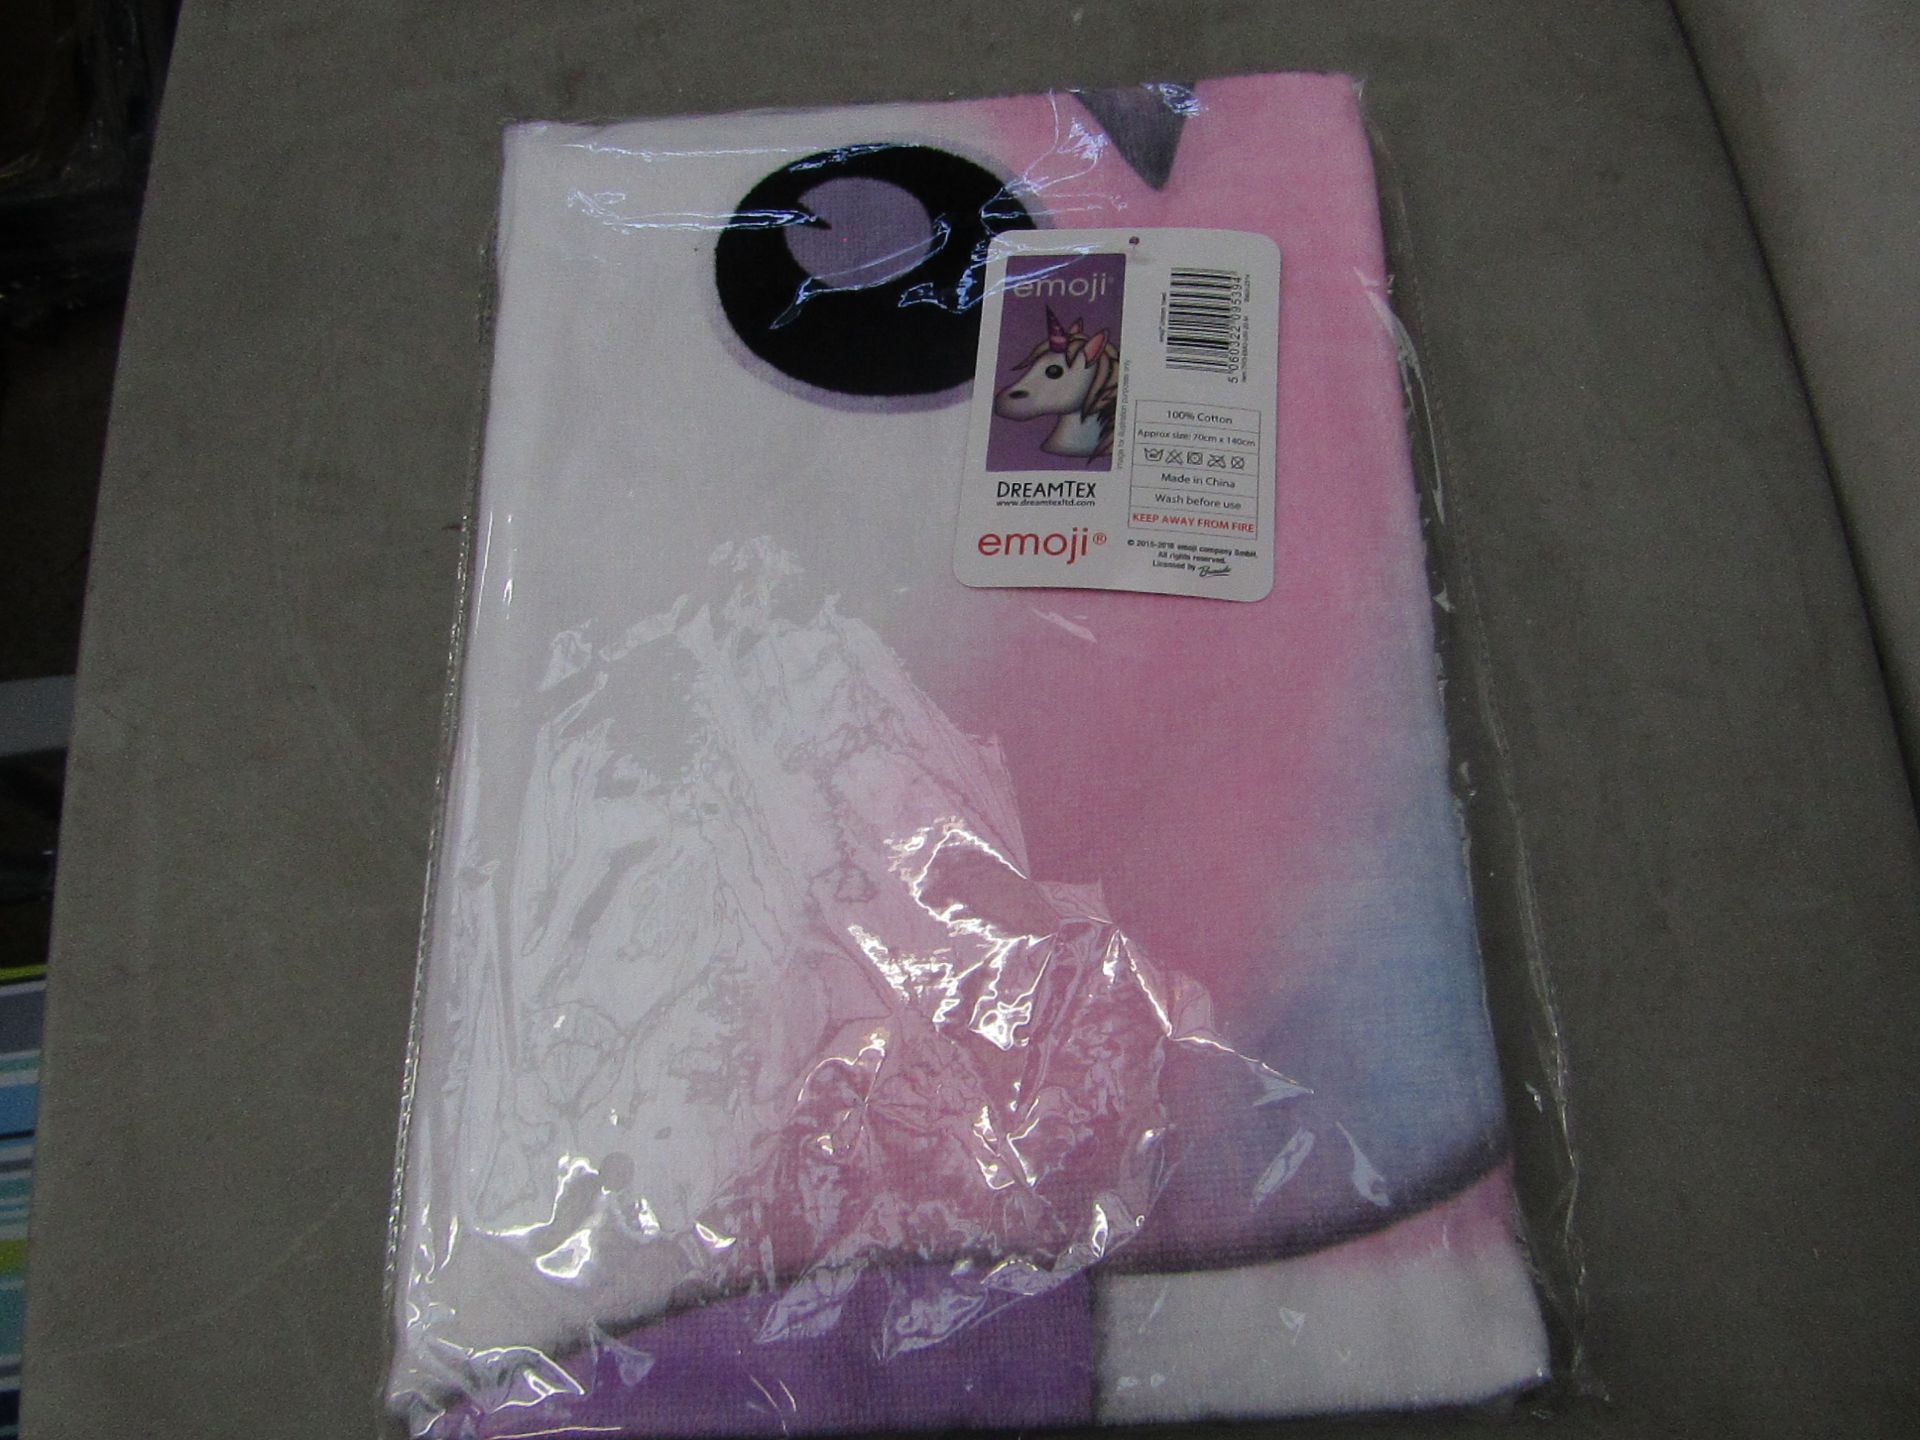 2 x Dreamtex Emoji Towels. New & Packaged. 140cm x 70cm